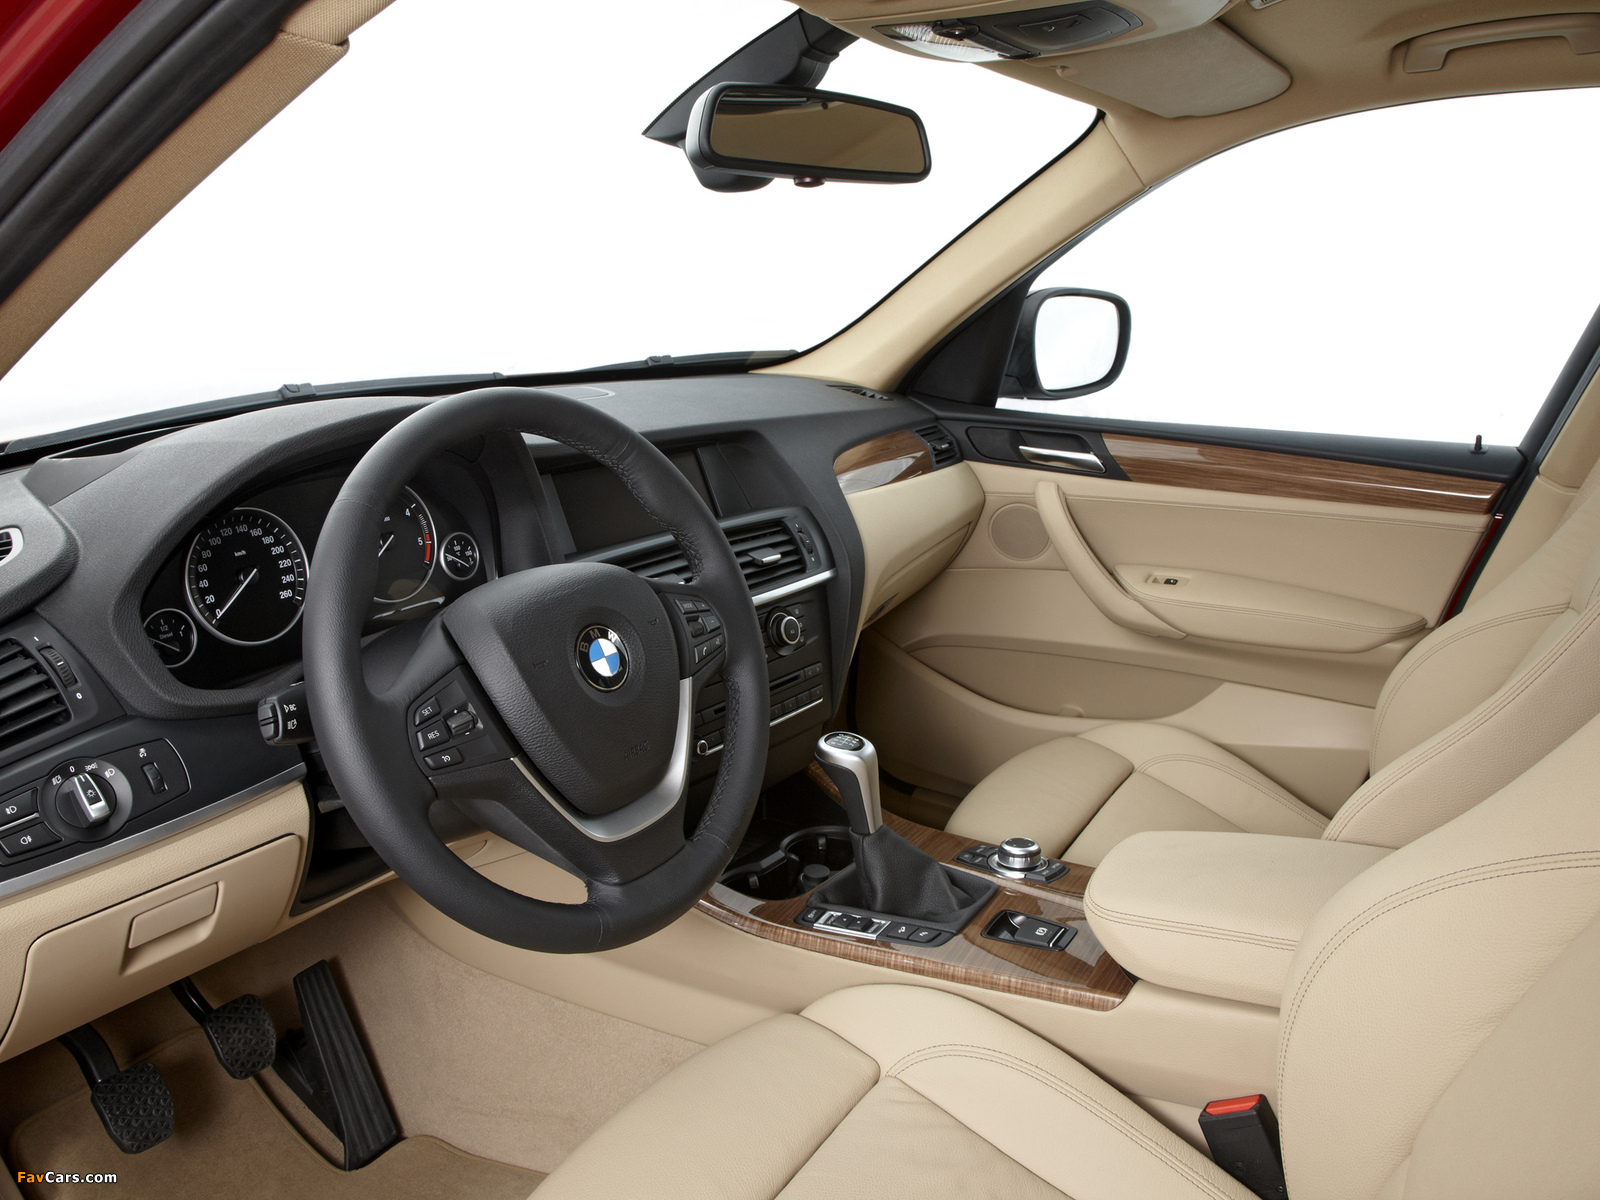 BMW X3 xDrive20d (F25) 2010 images (1600 x 1200)